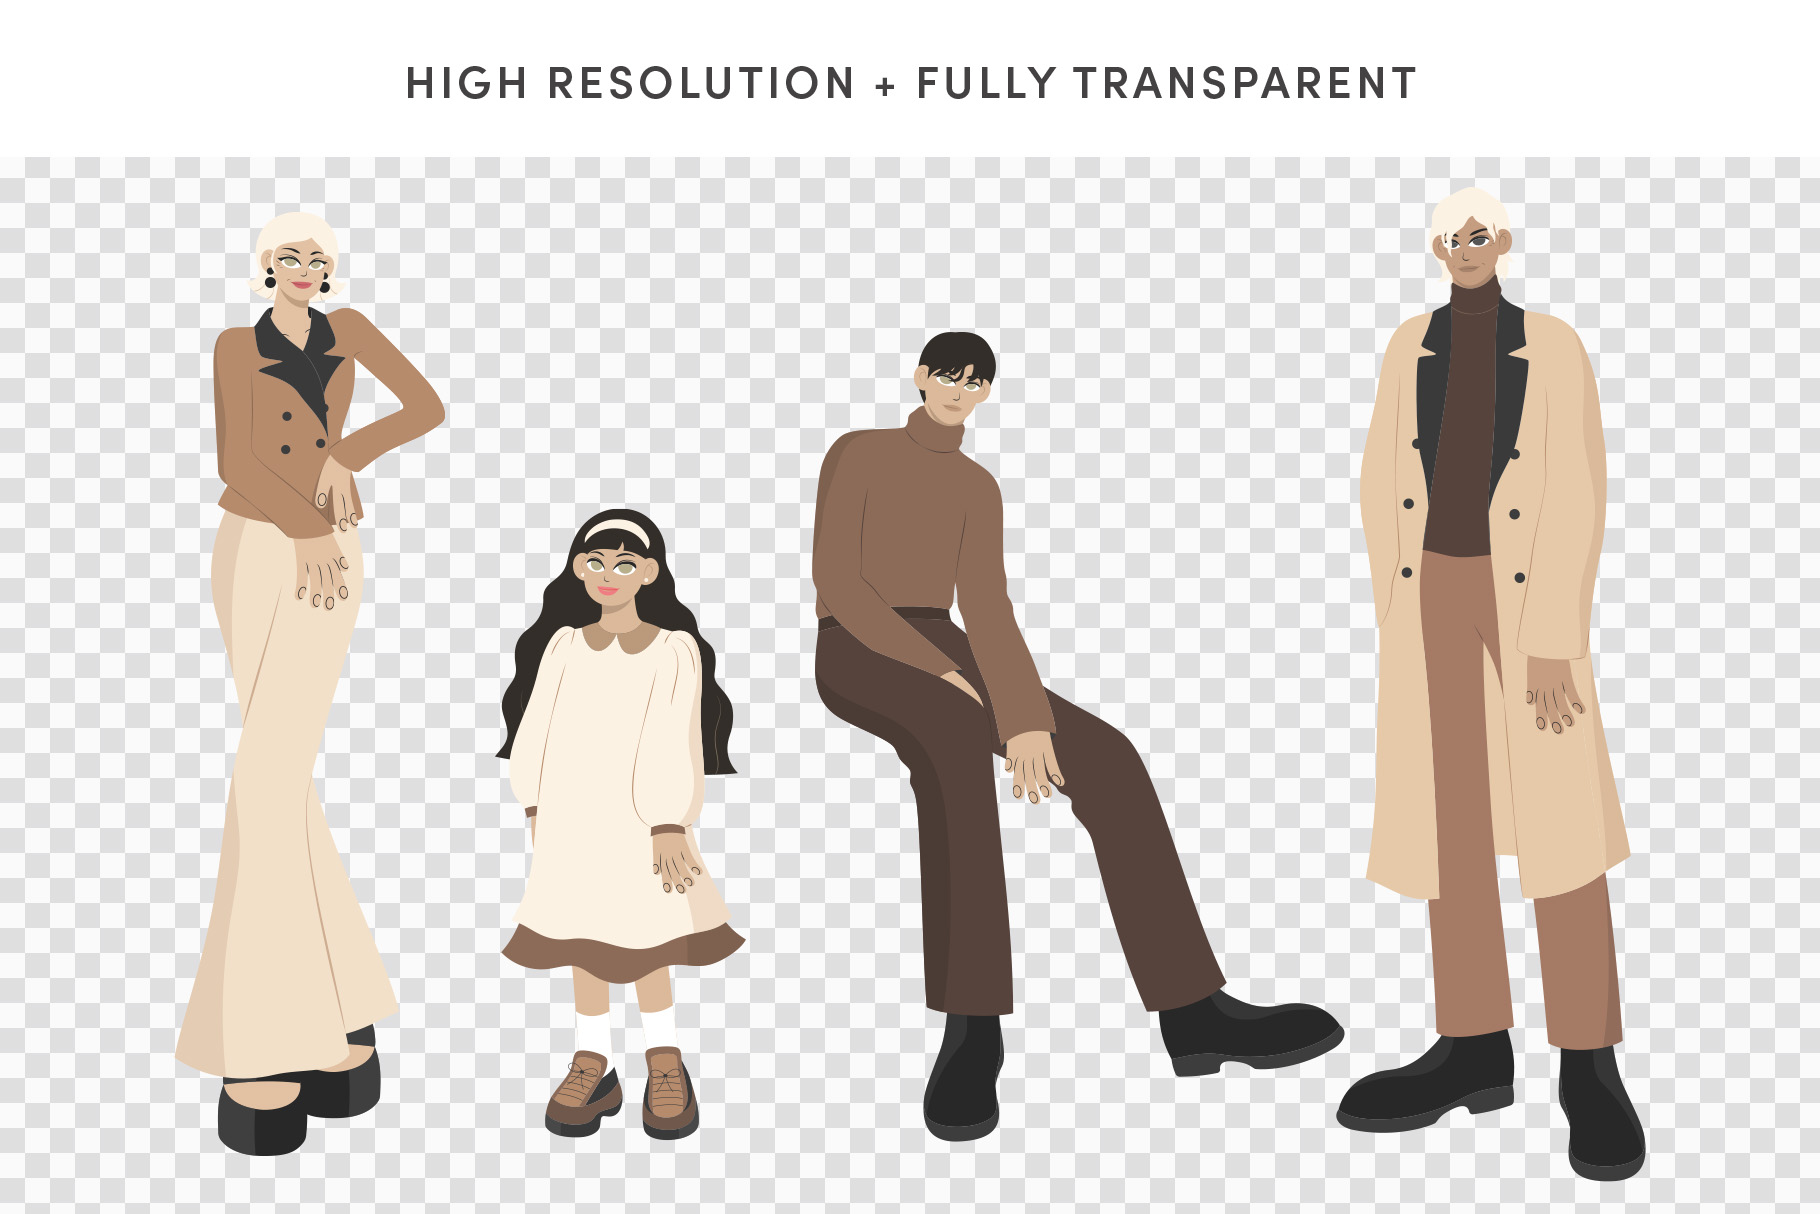 Diverse Family Illustrations Set (AI, EPS, PNG Format)